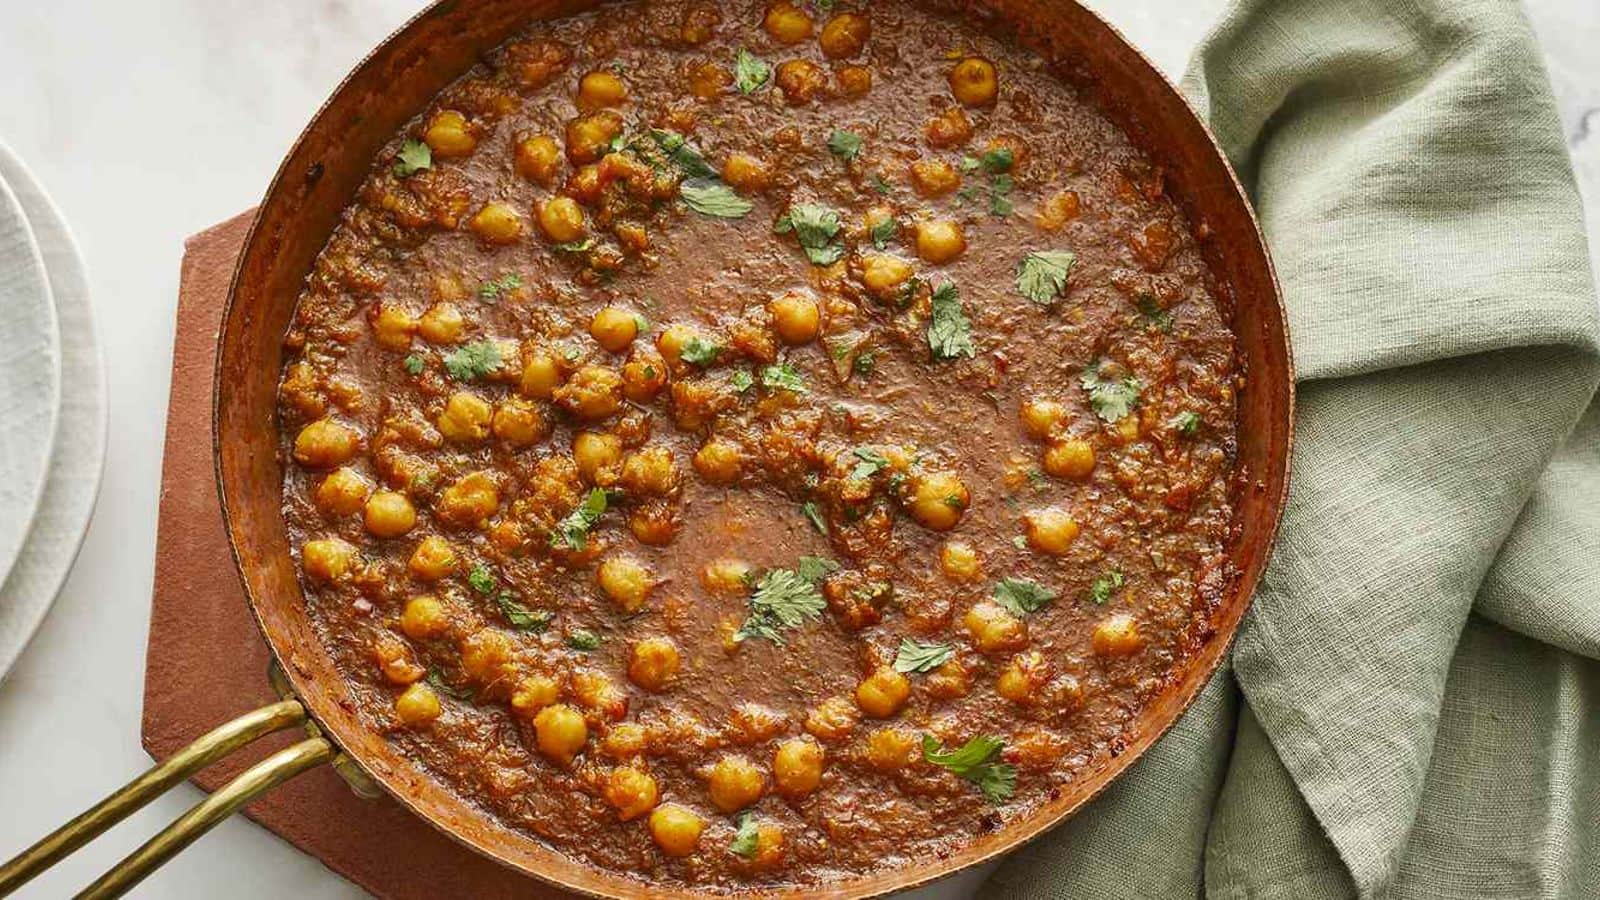 It's recipe time! Make scrumptious Indian chana masala